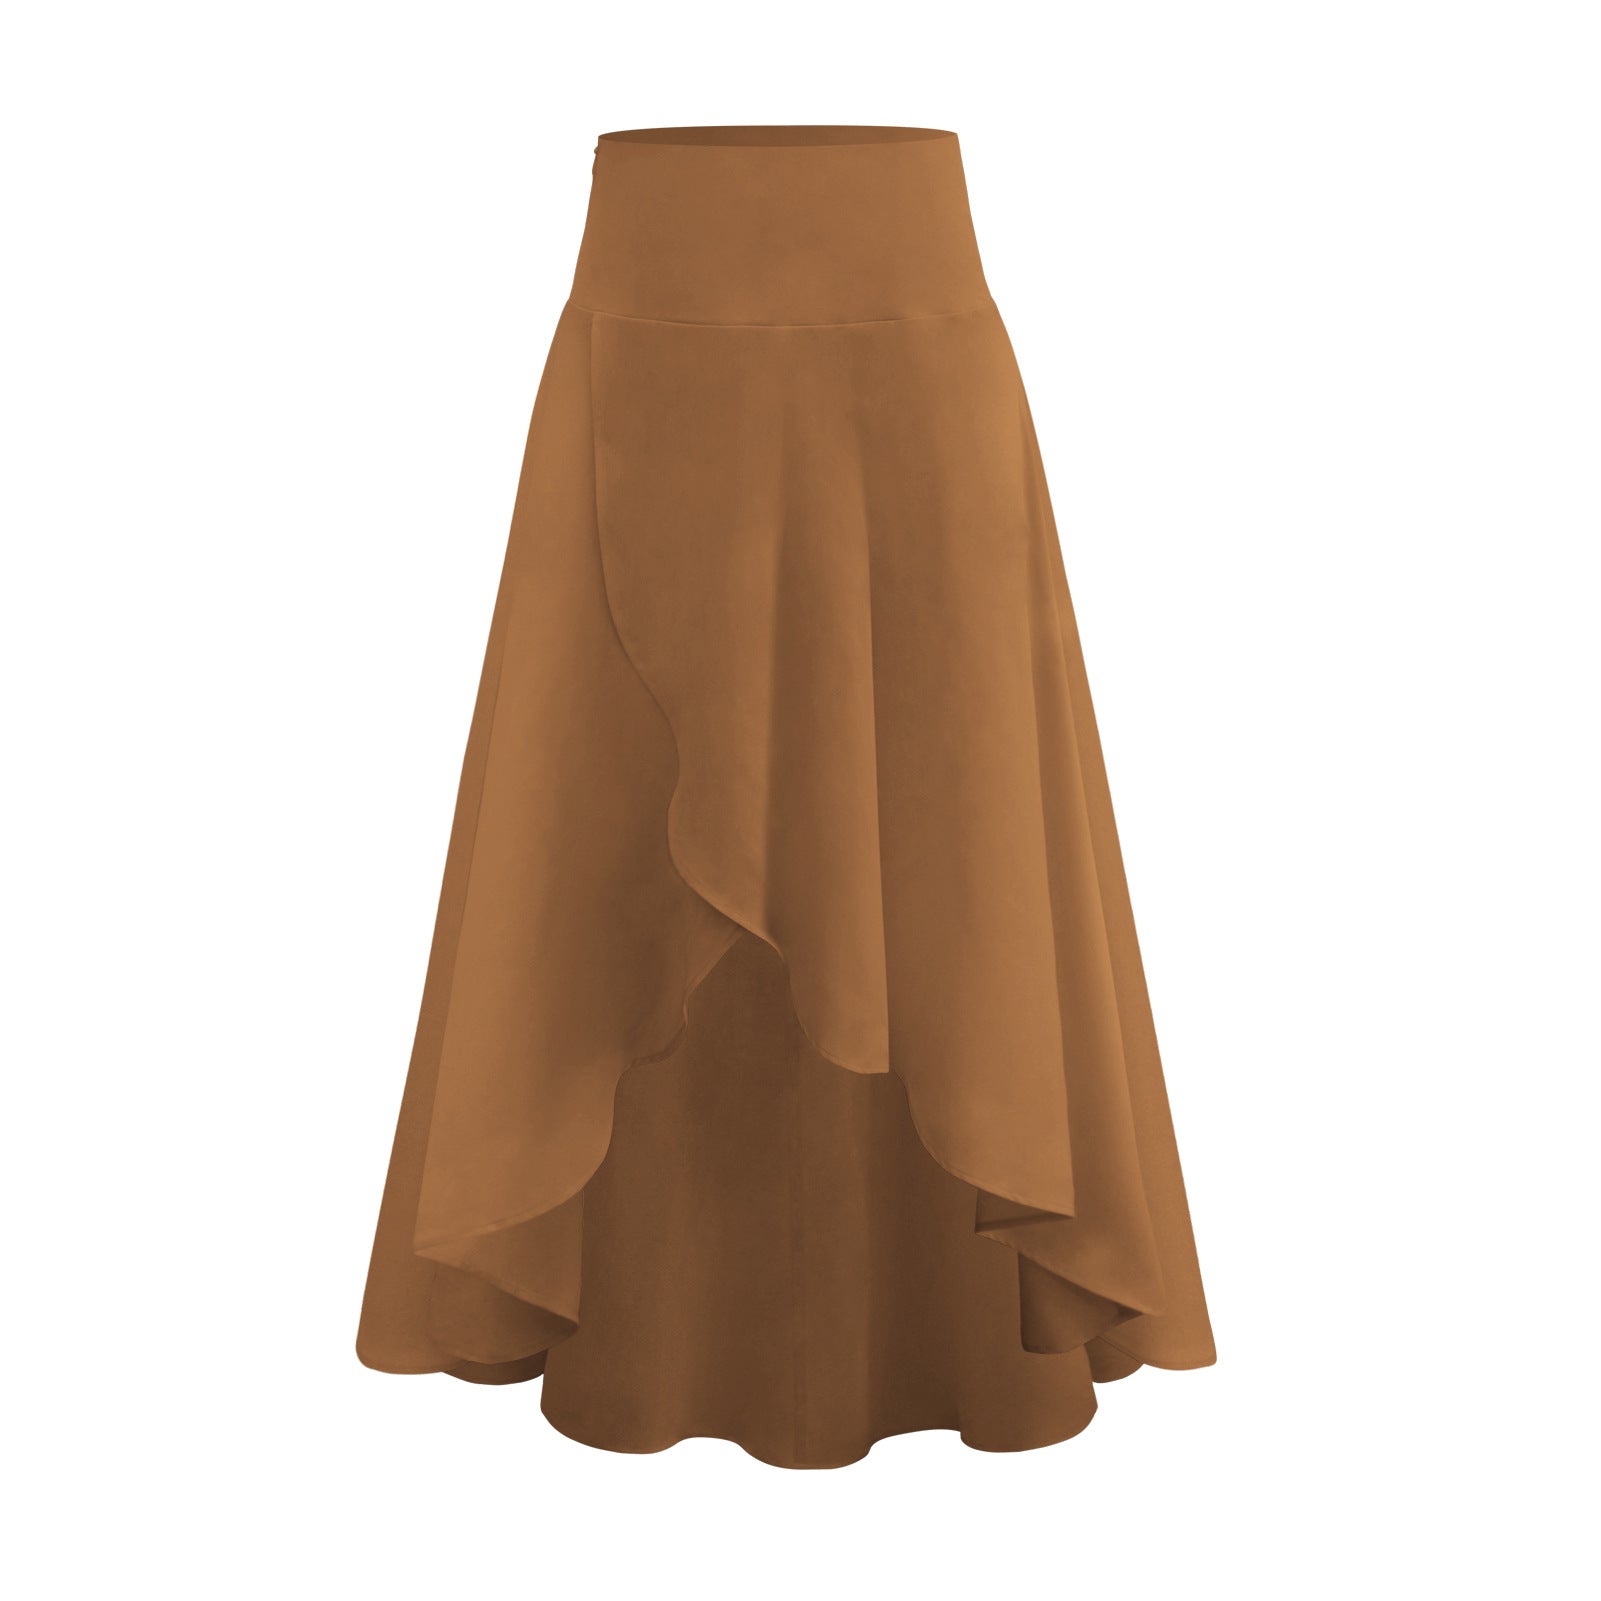 Women's Ruffled Solid Color Irregular Elegant Summer Wear Fashion Skirt